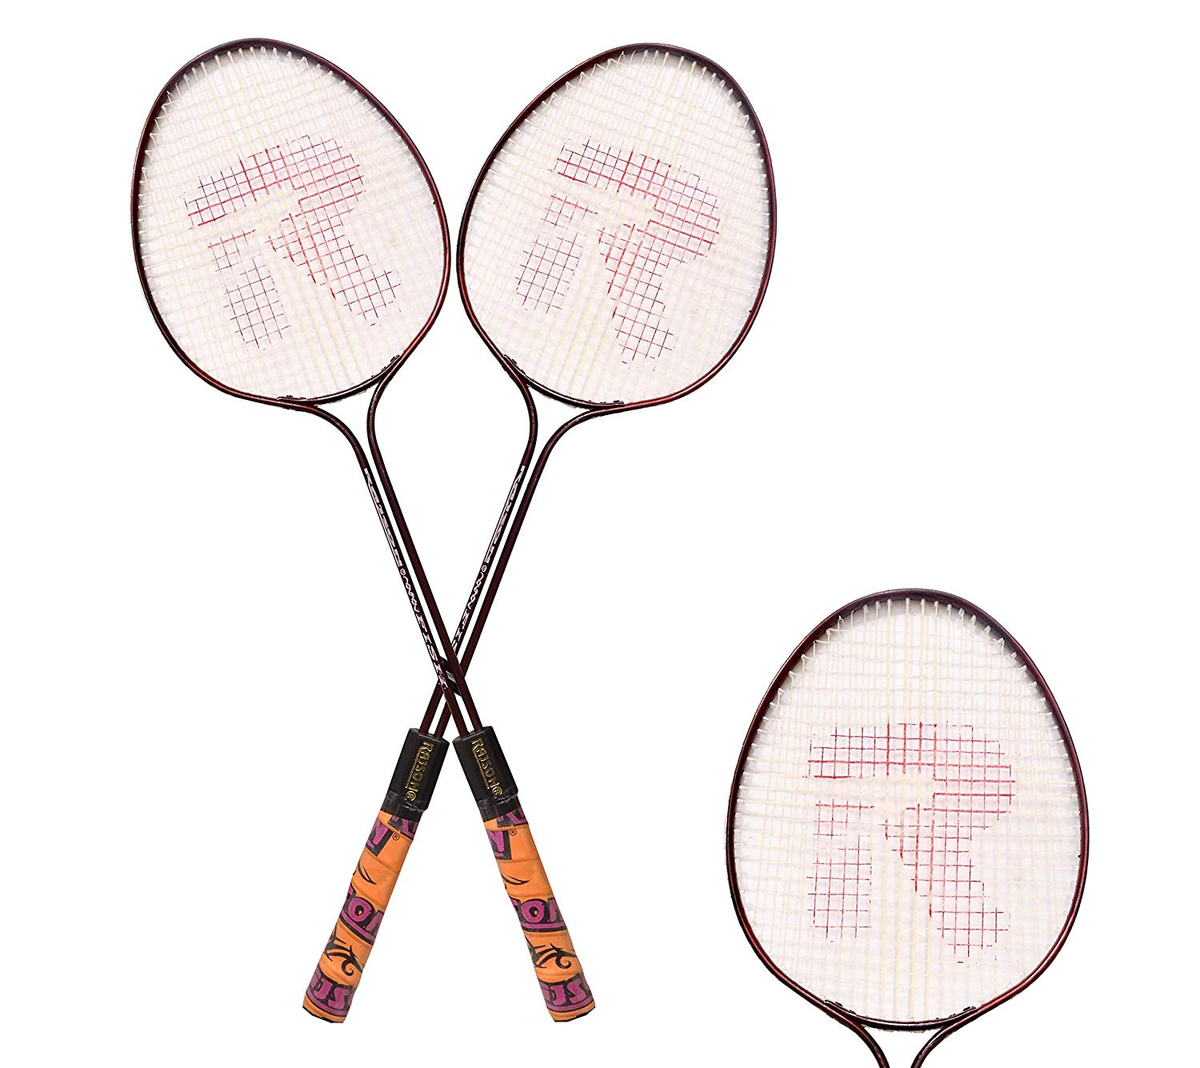 Buy Badminton Rackets online at best price Sppartos